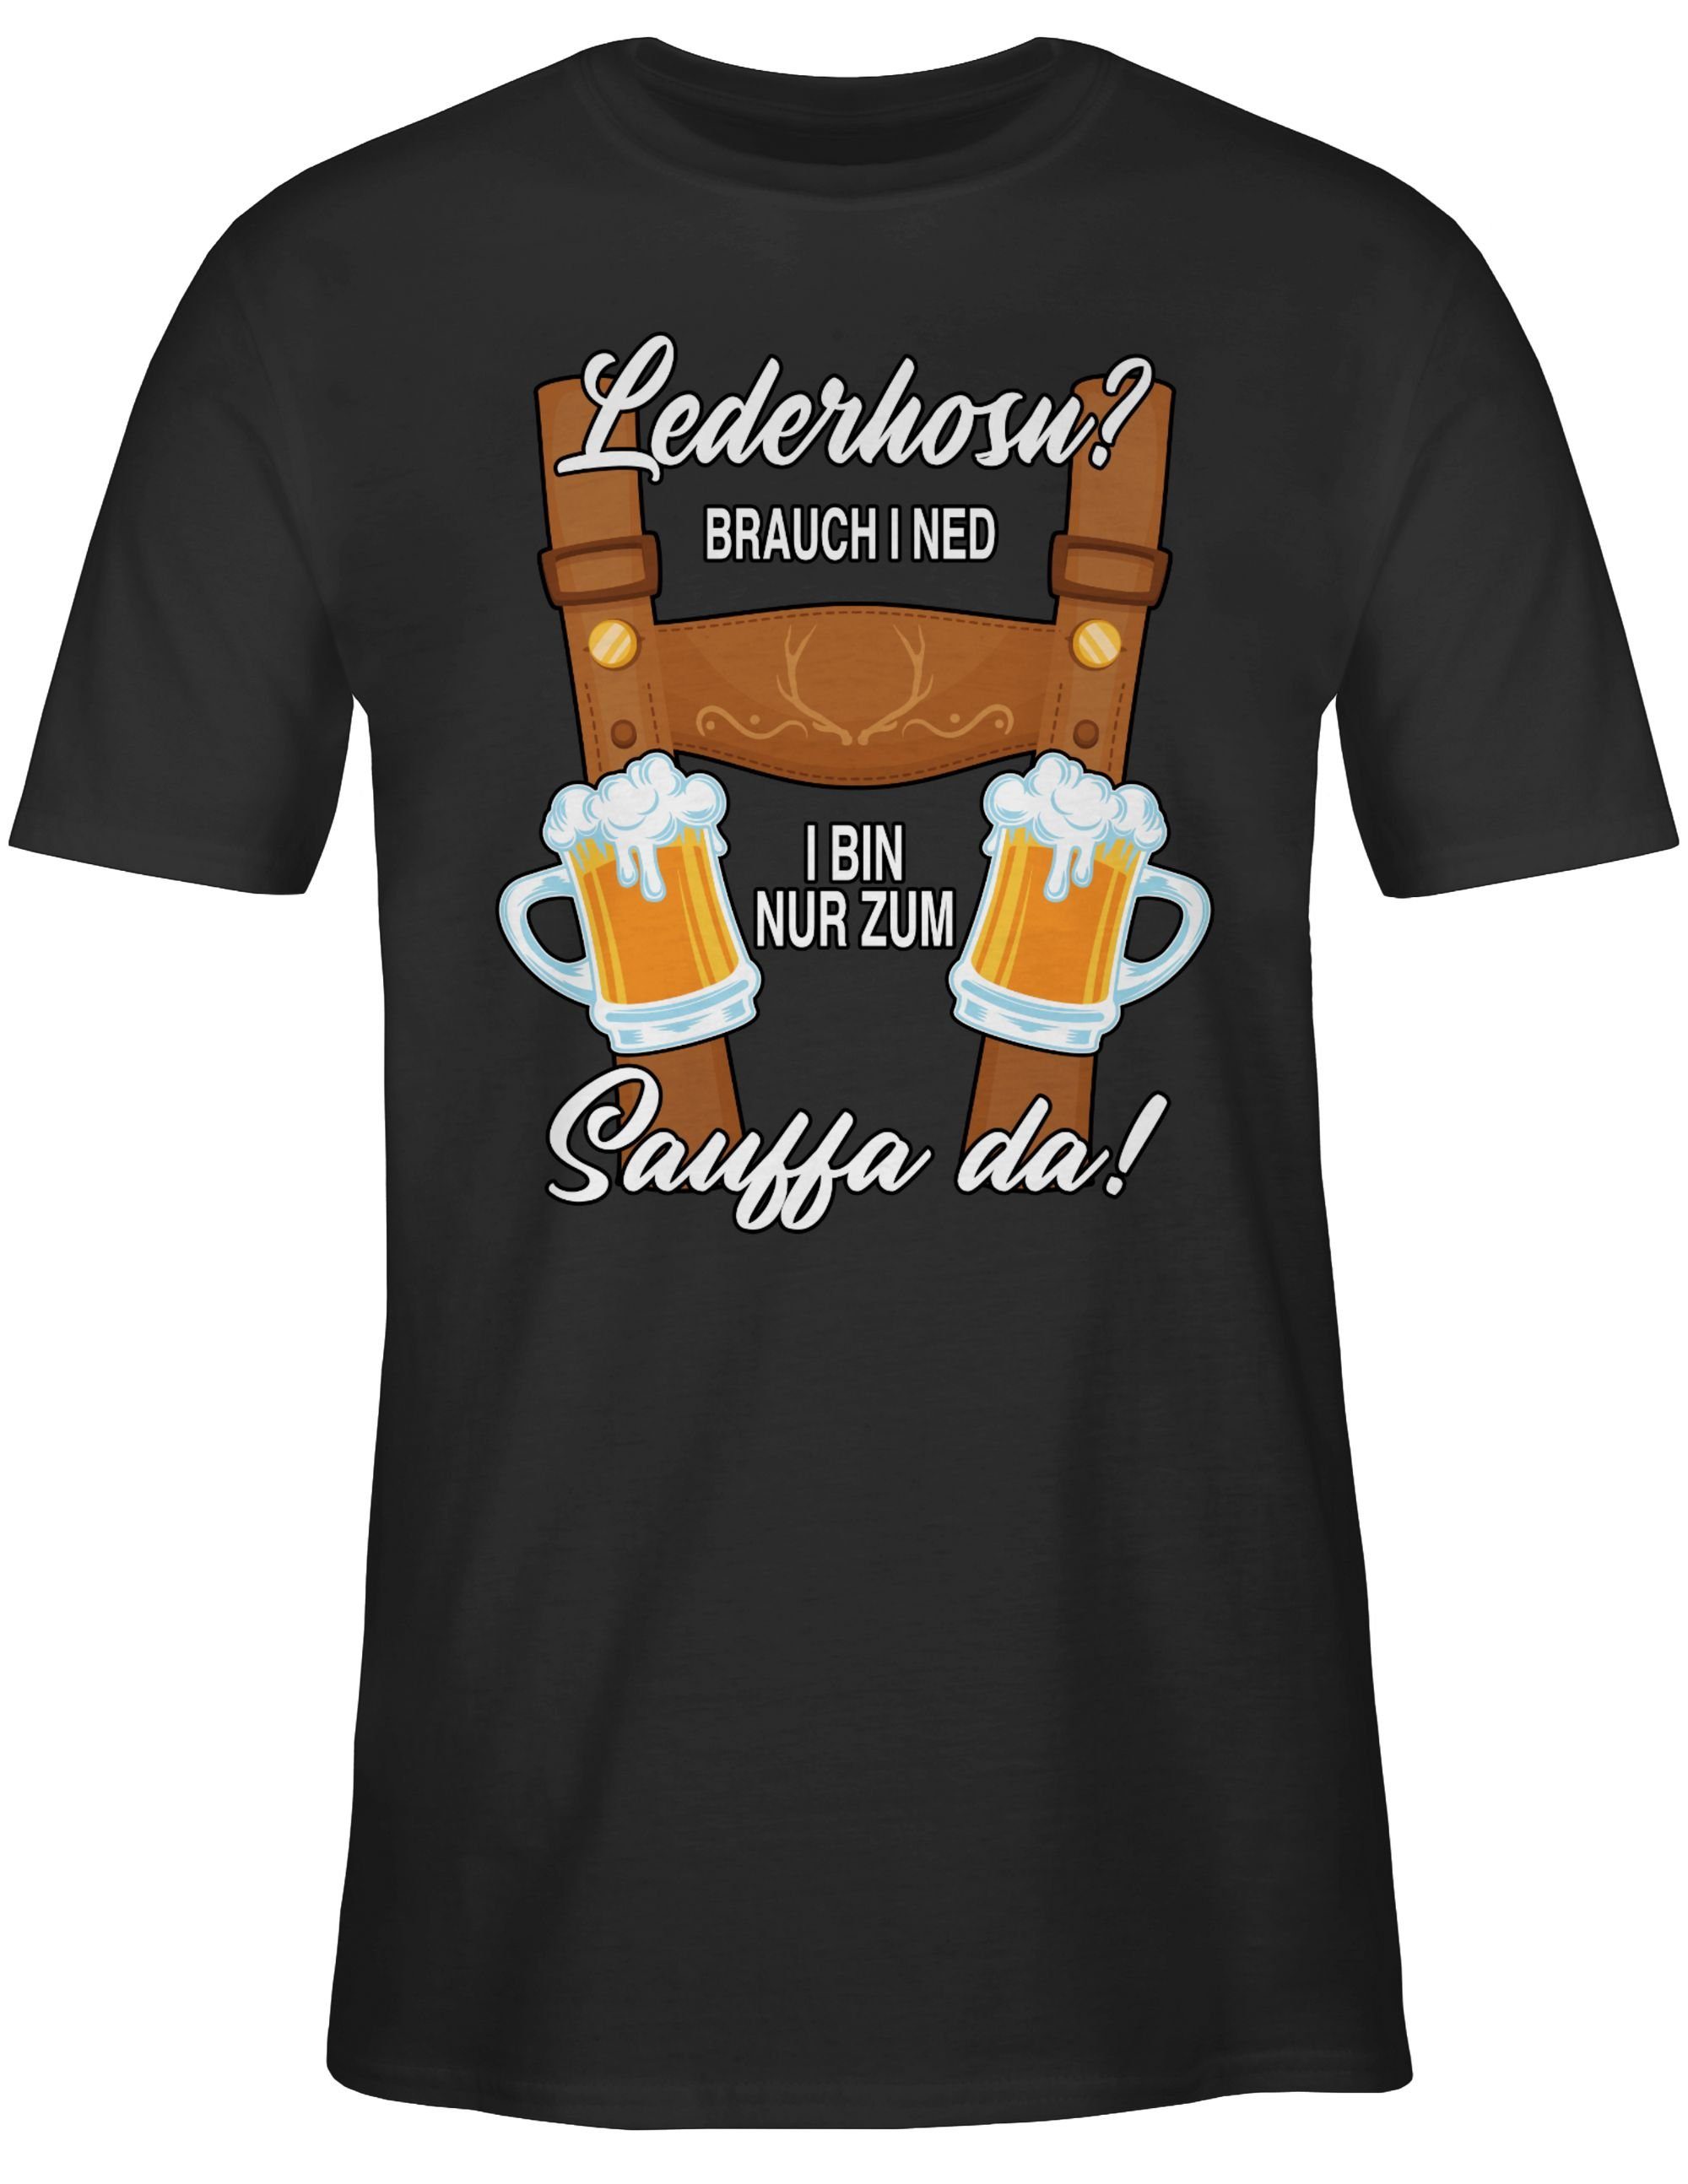 Shirtracer T-Shirt Trachten Outfit Sauffa Mode 01 Lausbub für Herren Oktoberfest Lederhose Schwarz